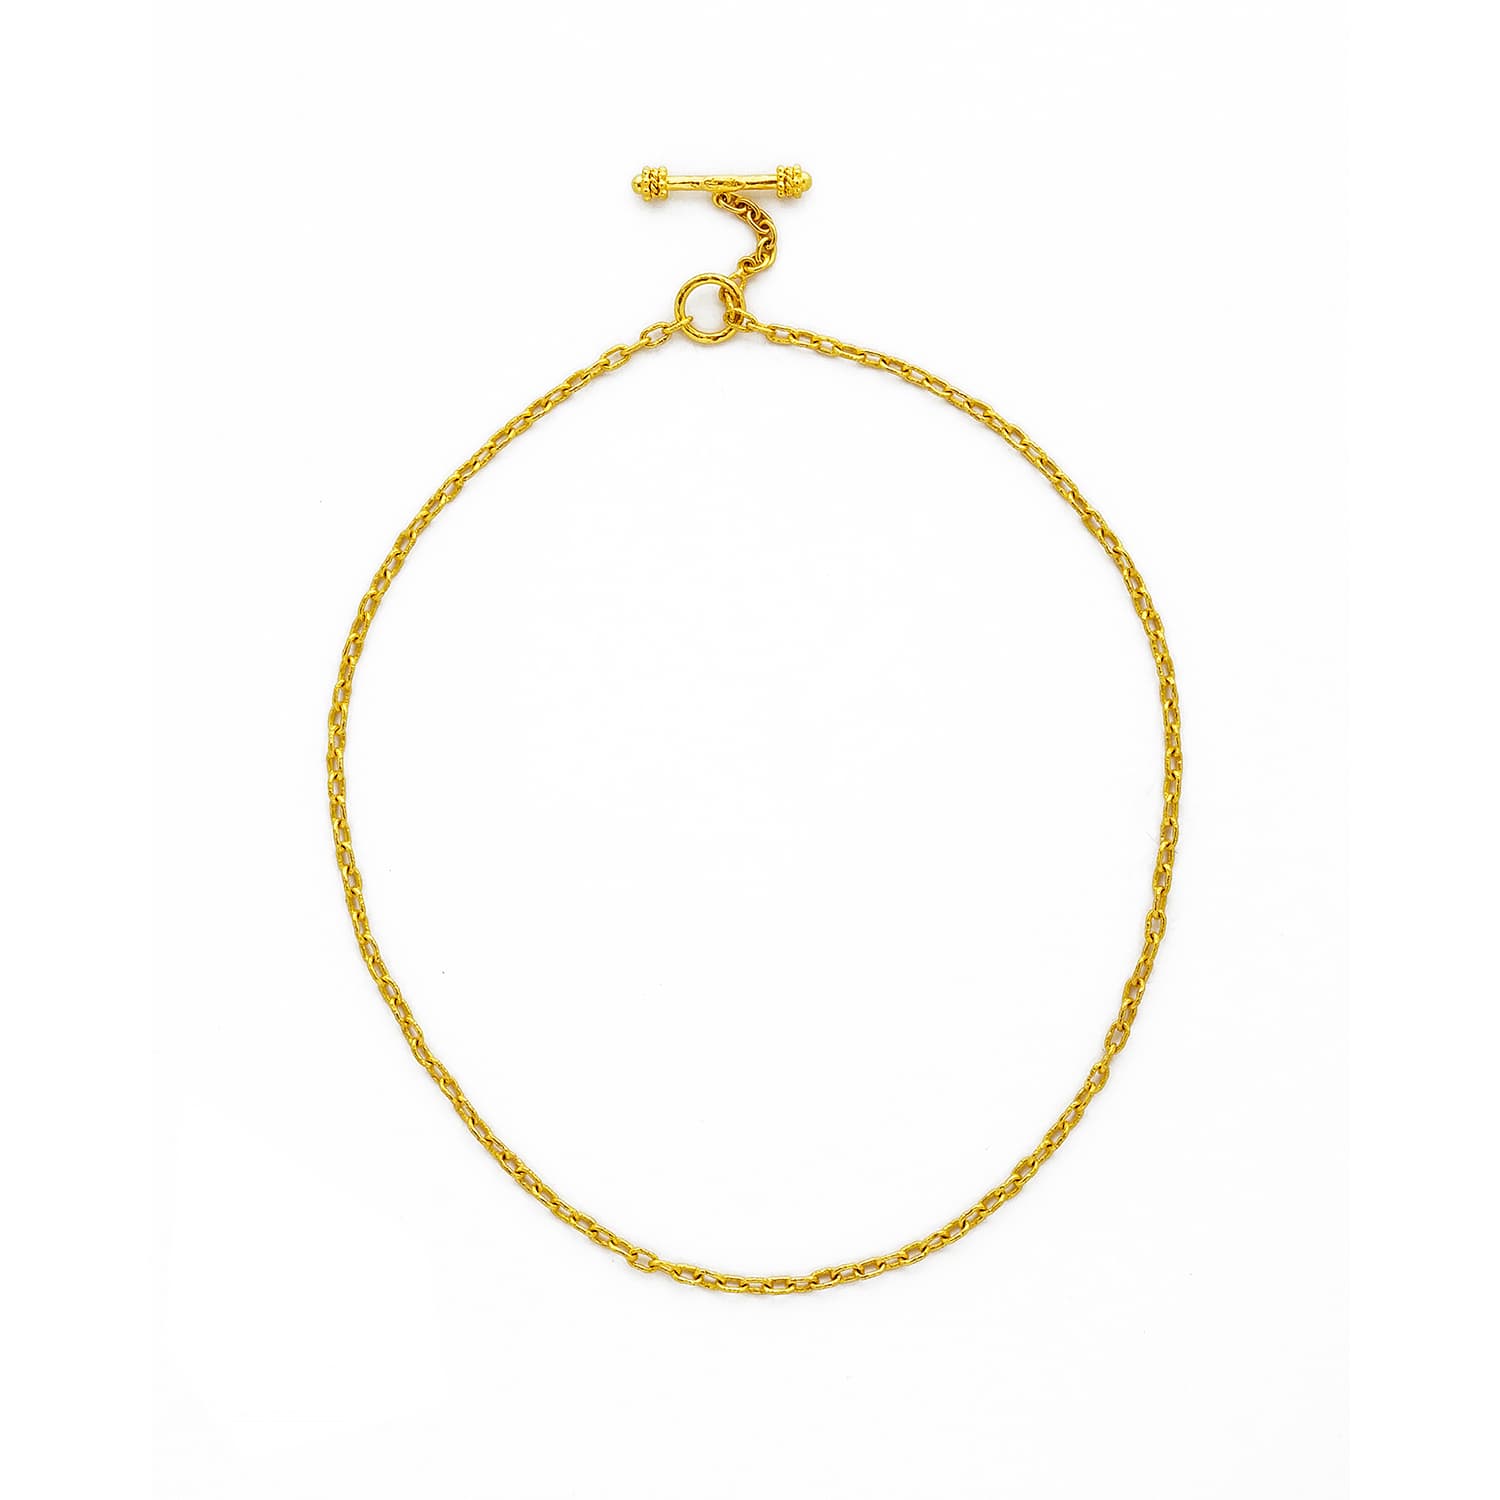 Elizabeth Locke Very Fine Gold Chain Necklace - 17 inches 